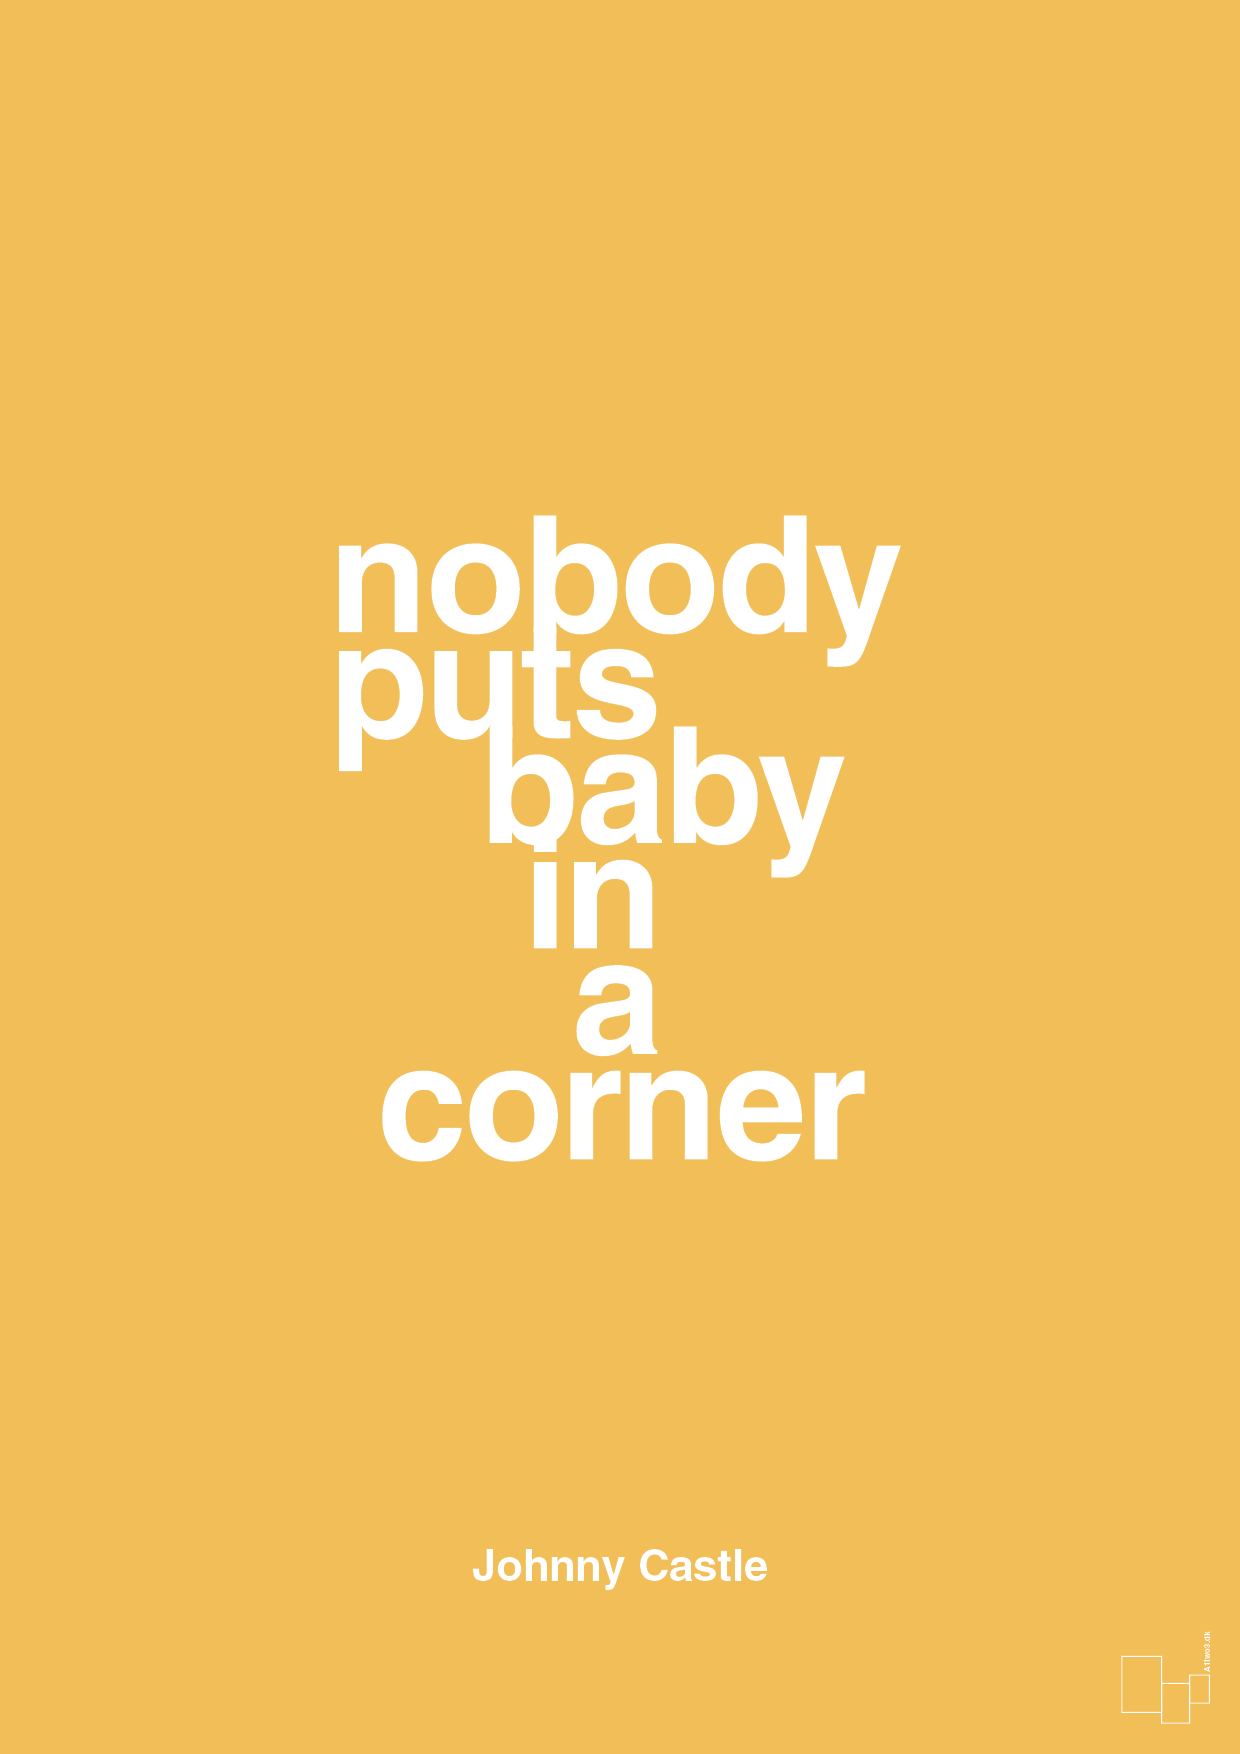 nobody puts baby in a corner - Plakat med Citater i Honeycomb